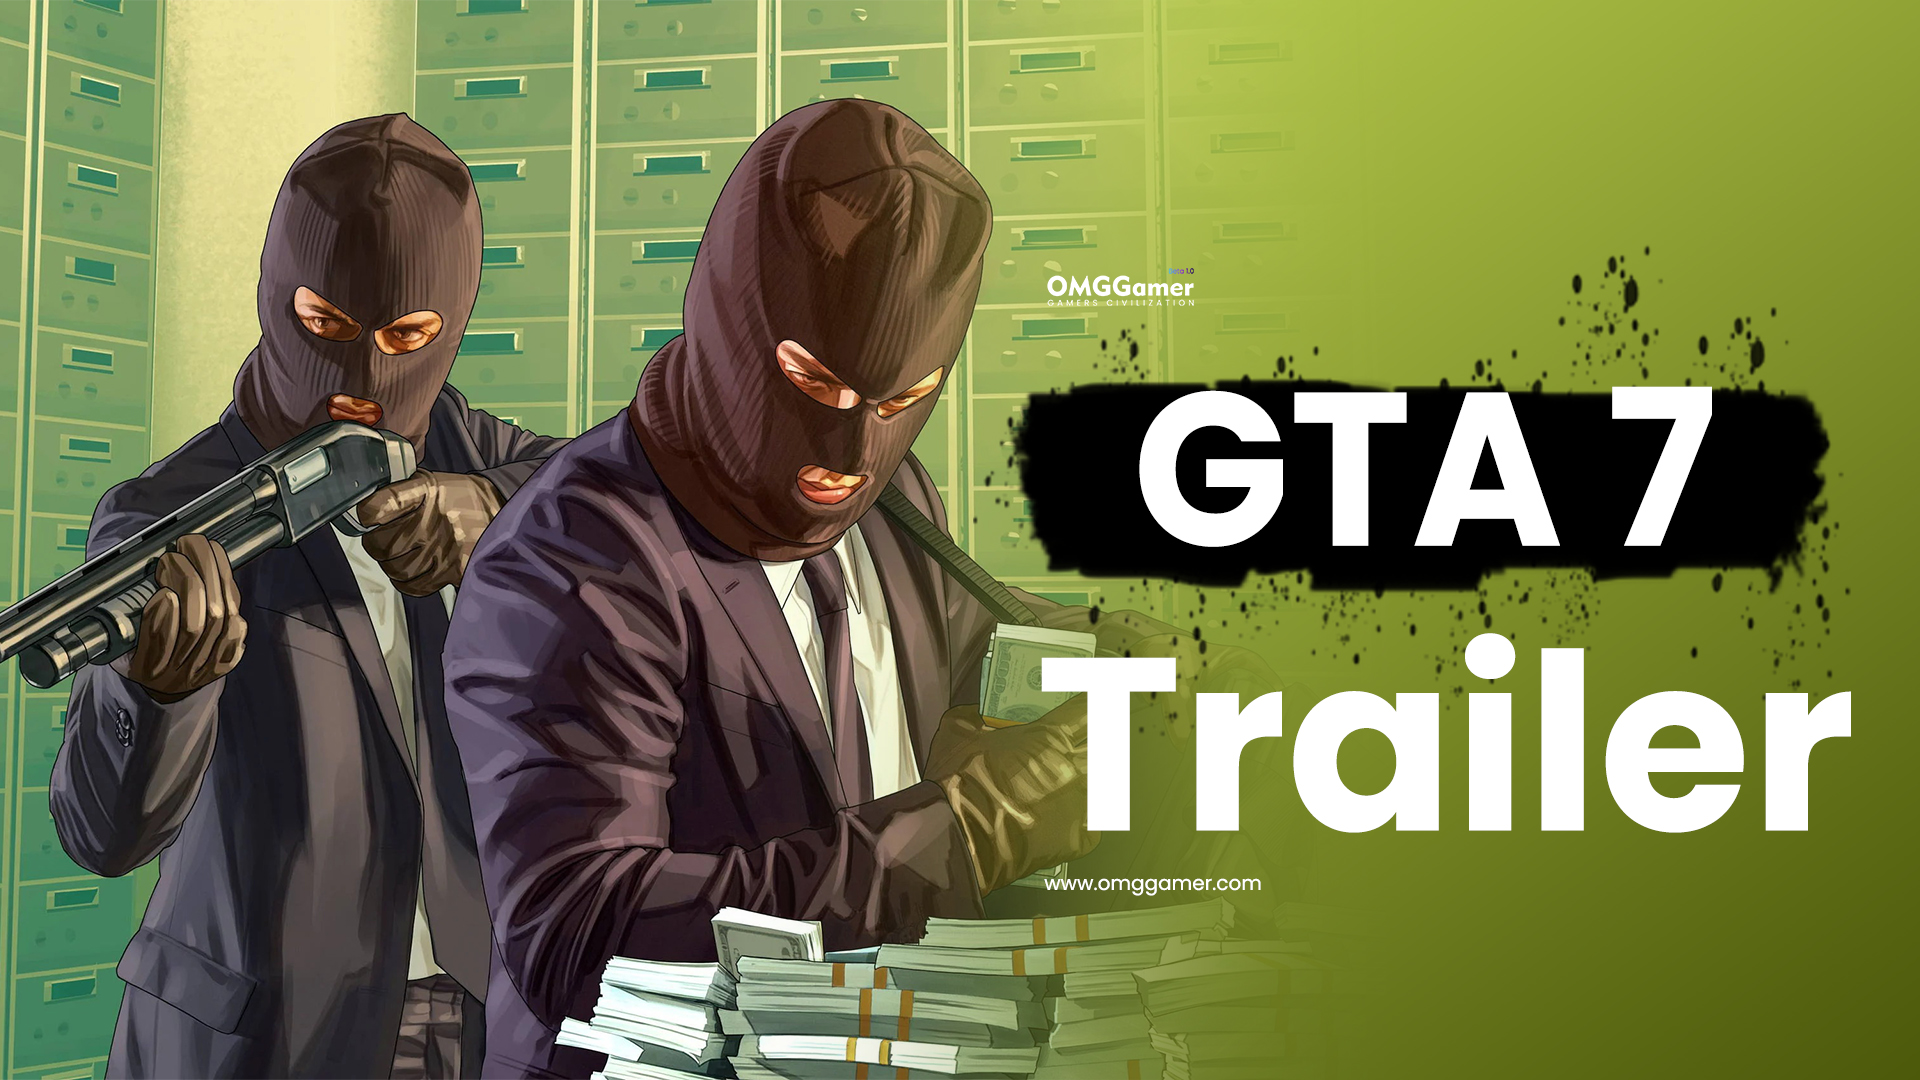 GTA 7 Trailer